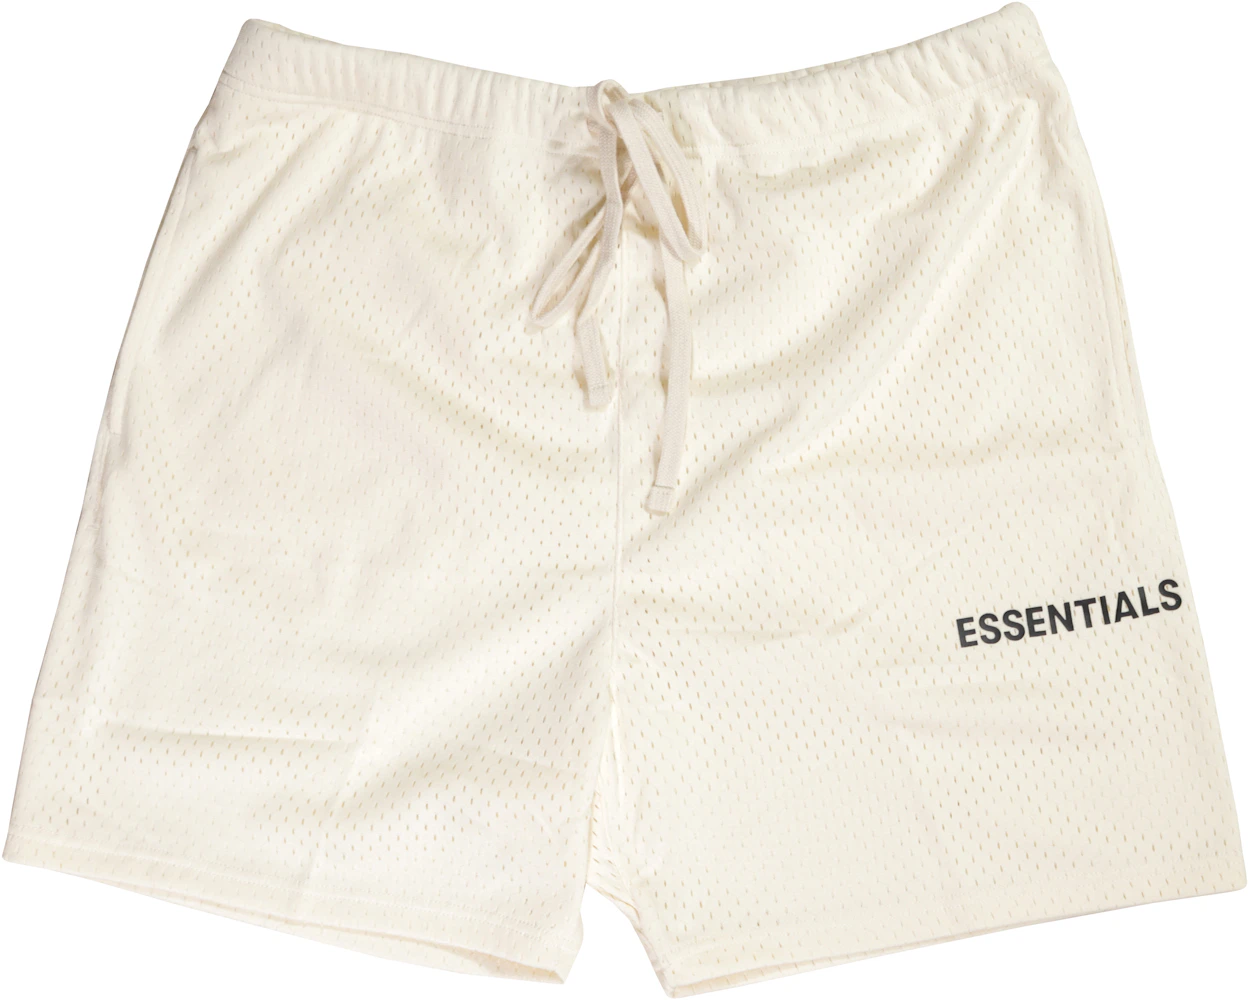 Fear of God Essentials Graphic Sweat Shorts Cream Men's